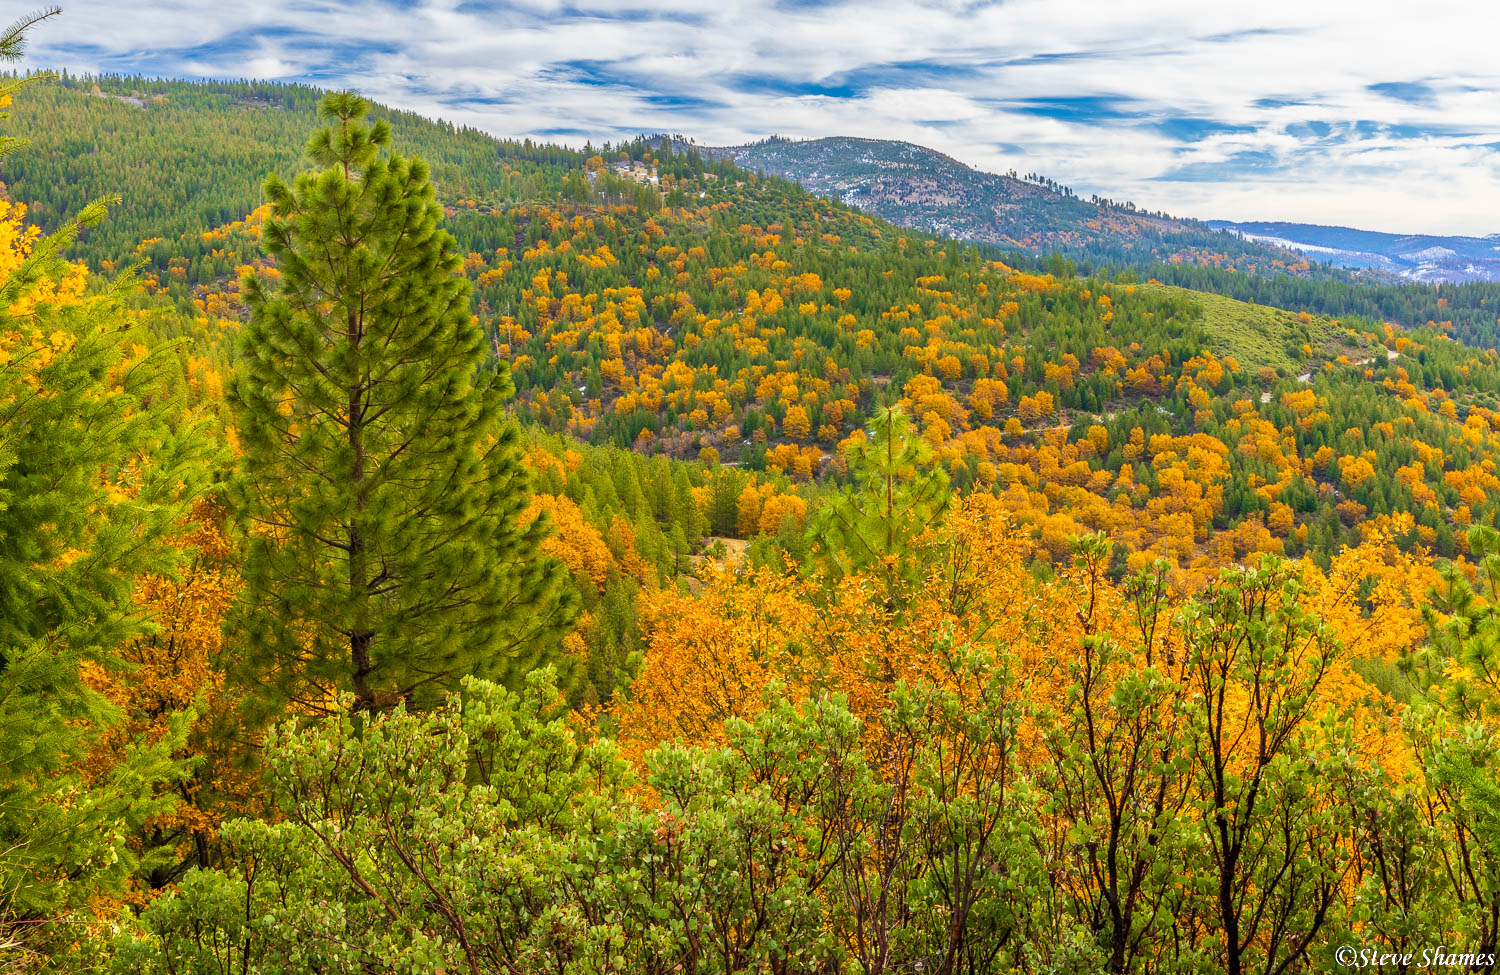 Fall colors on a Sierra foothills hillside.